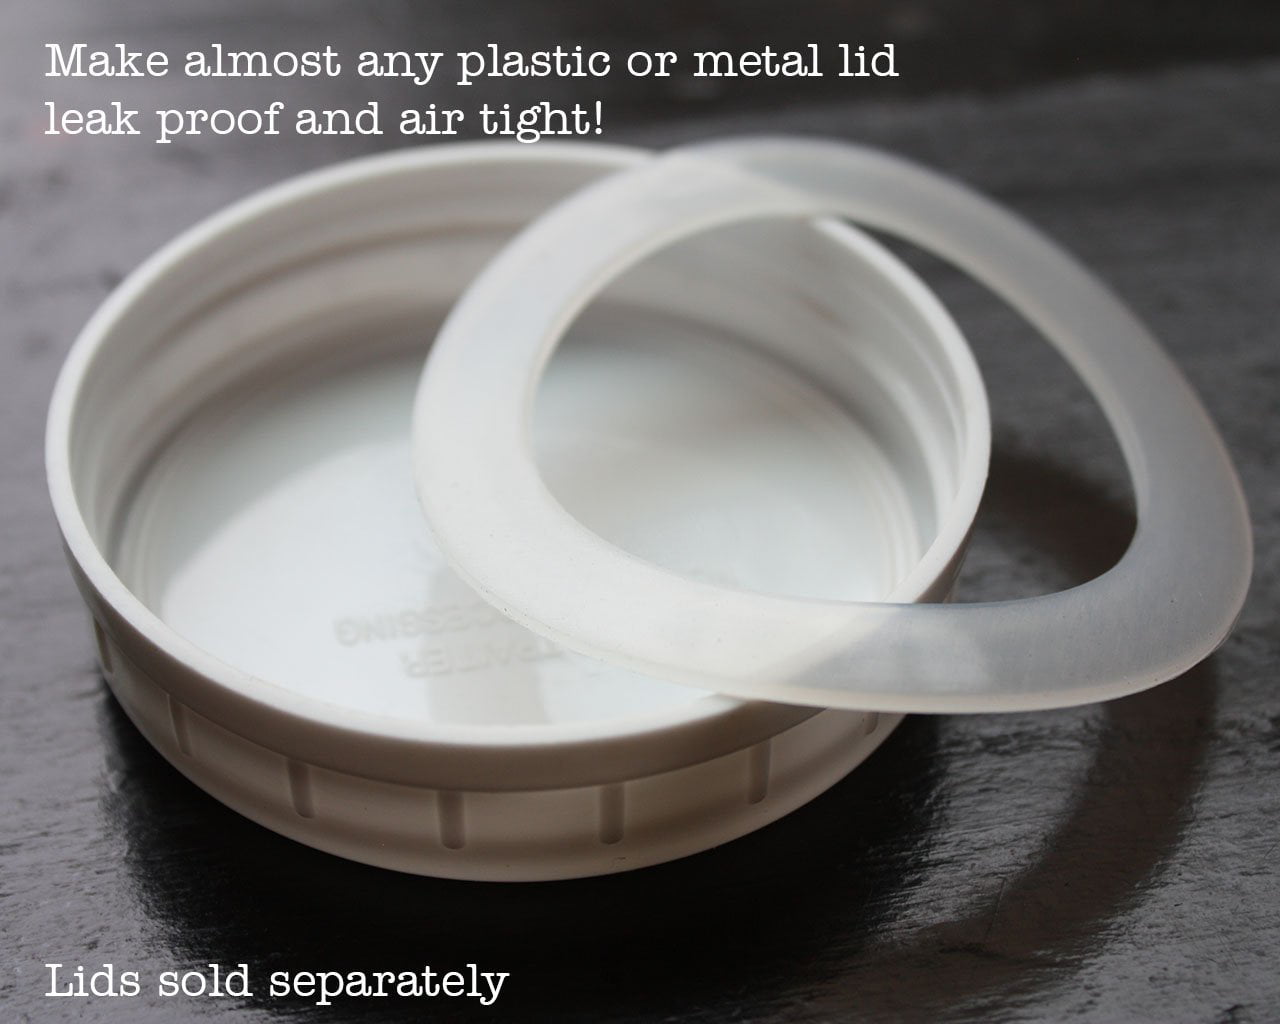 12x Silicone Sealing Rings Gaskets for Leak Proof Regular Mouth Jar Lids Organiz